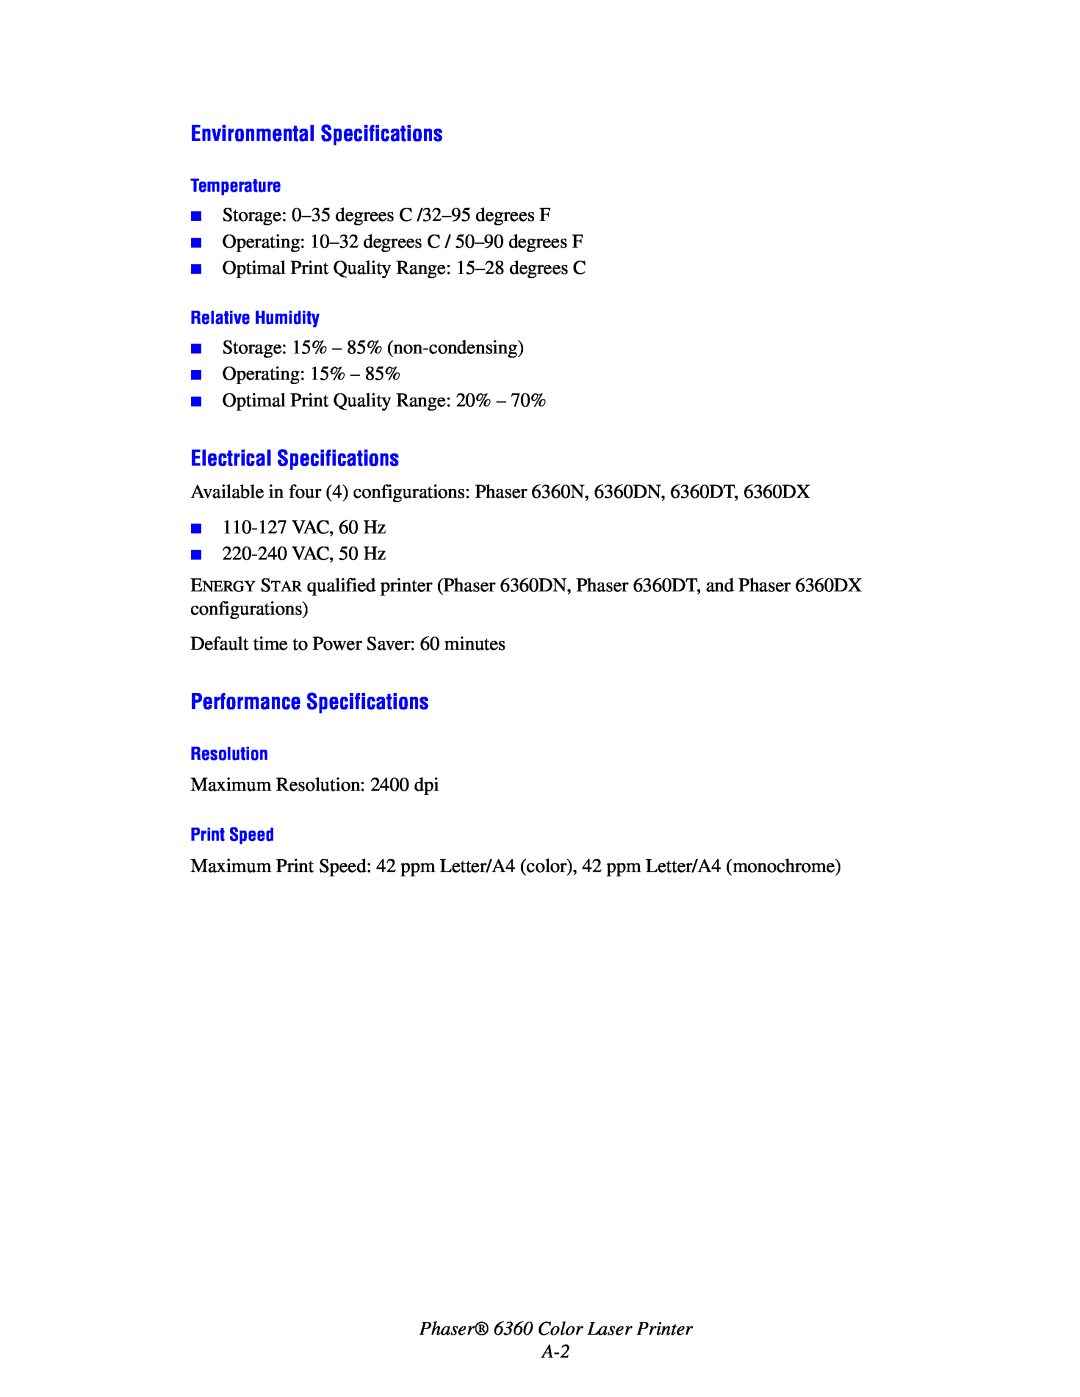 Xerox 6360 manual Environmental Specifications, Electrical Specifications, Performance Specifications 